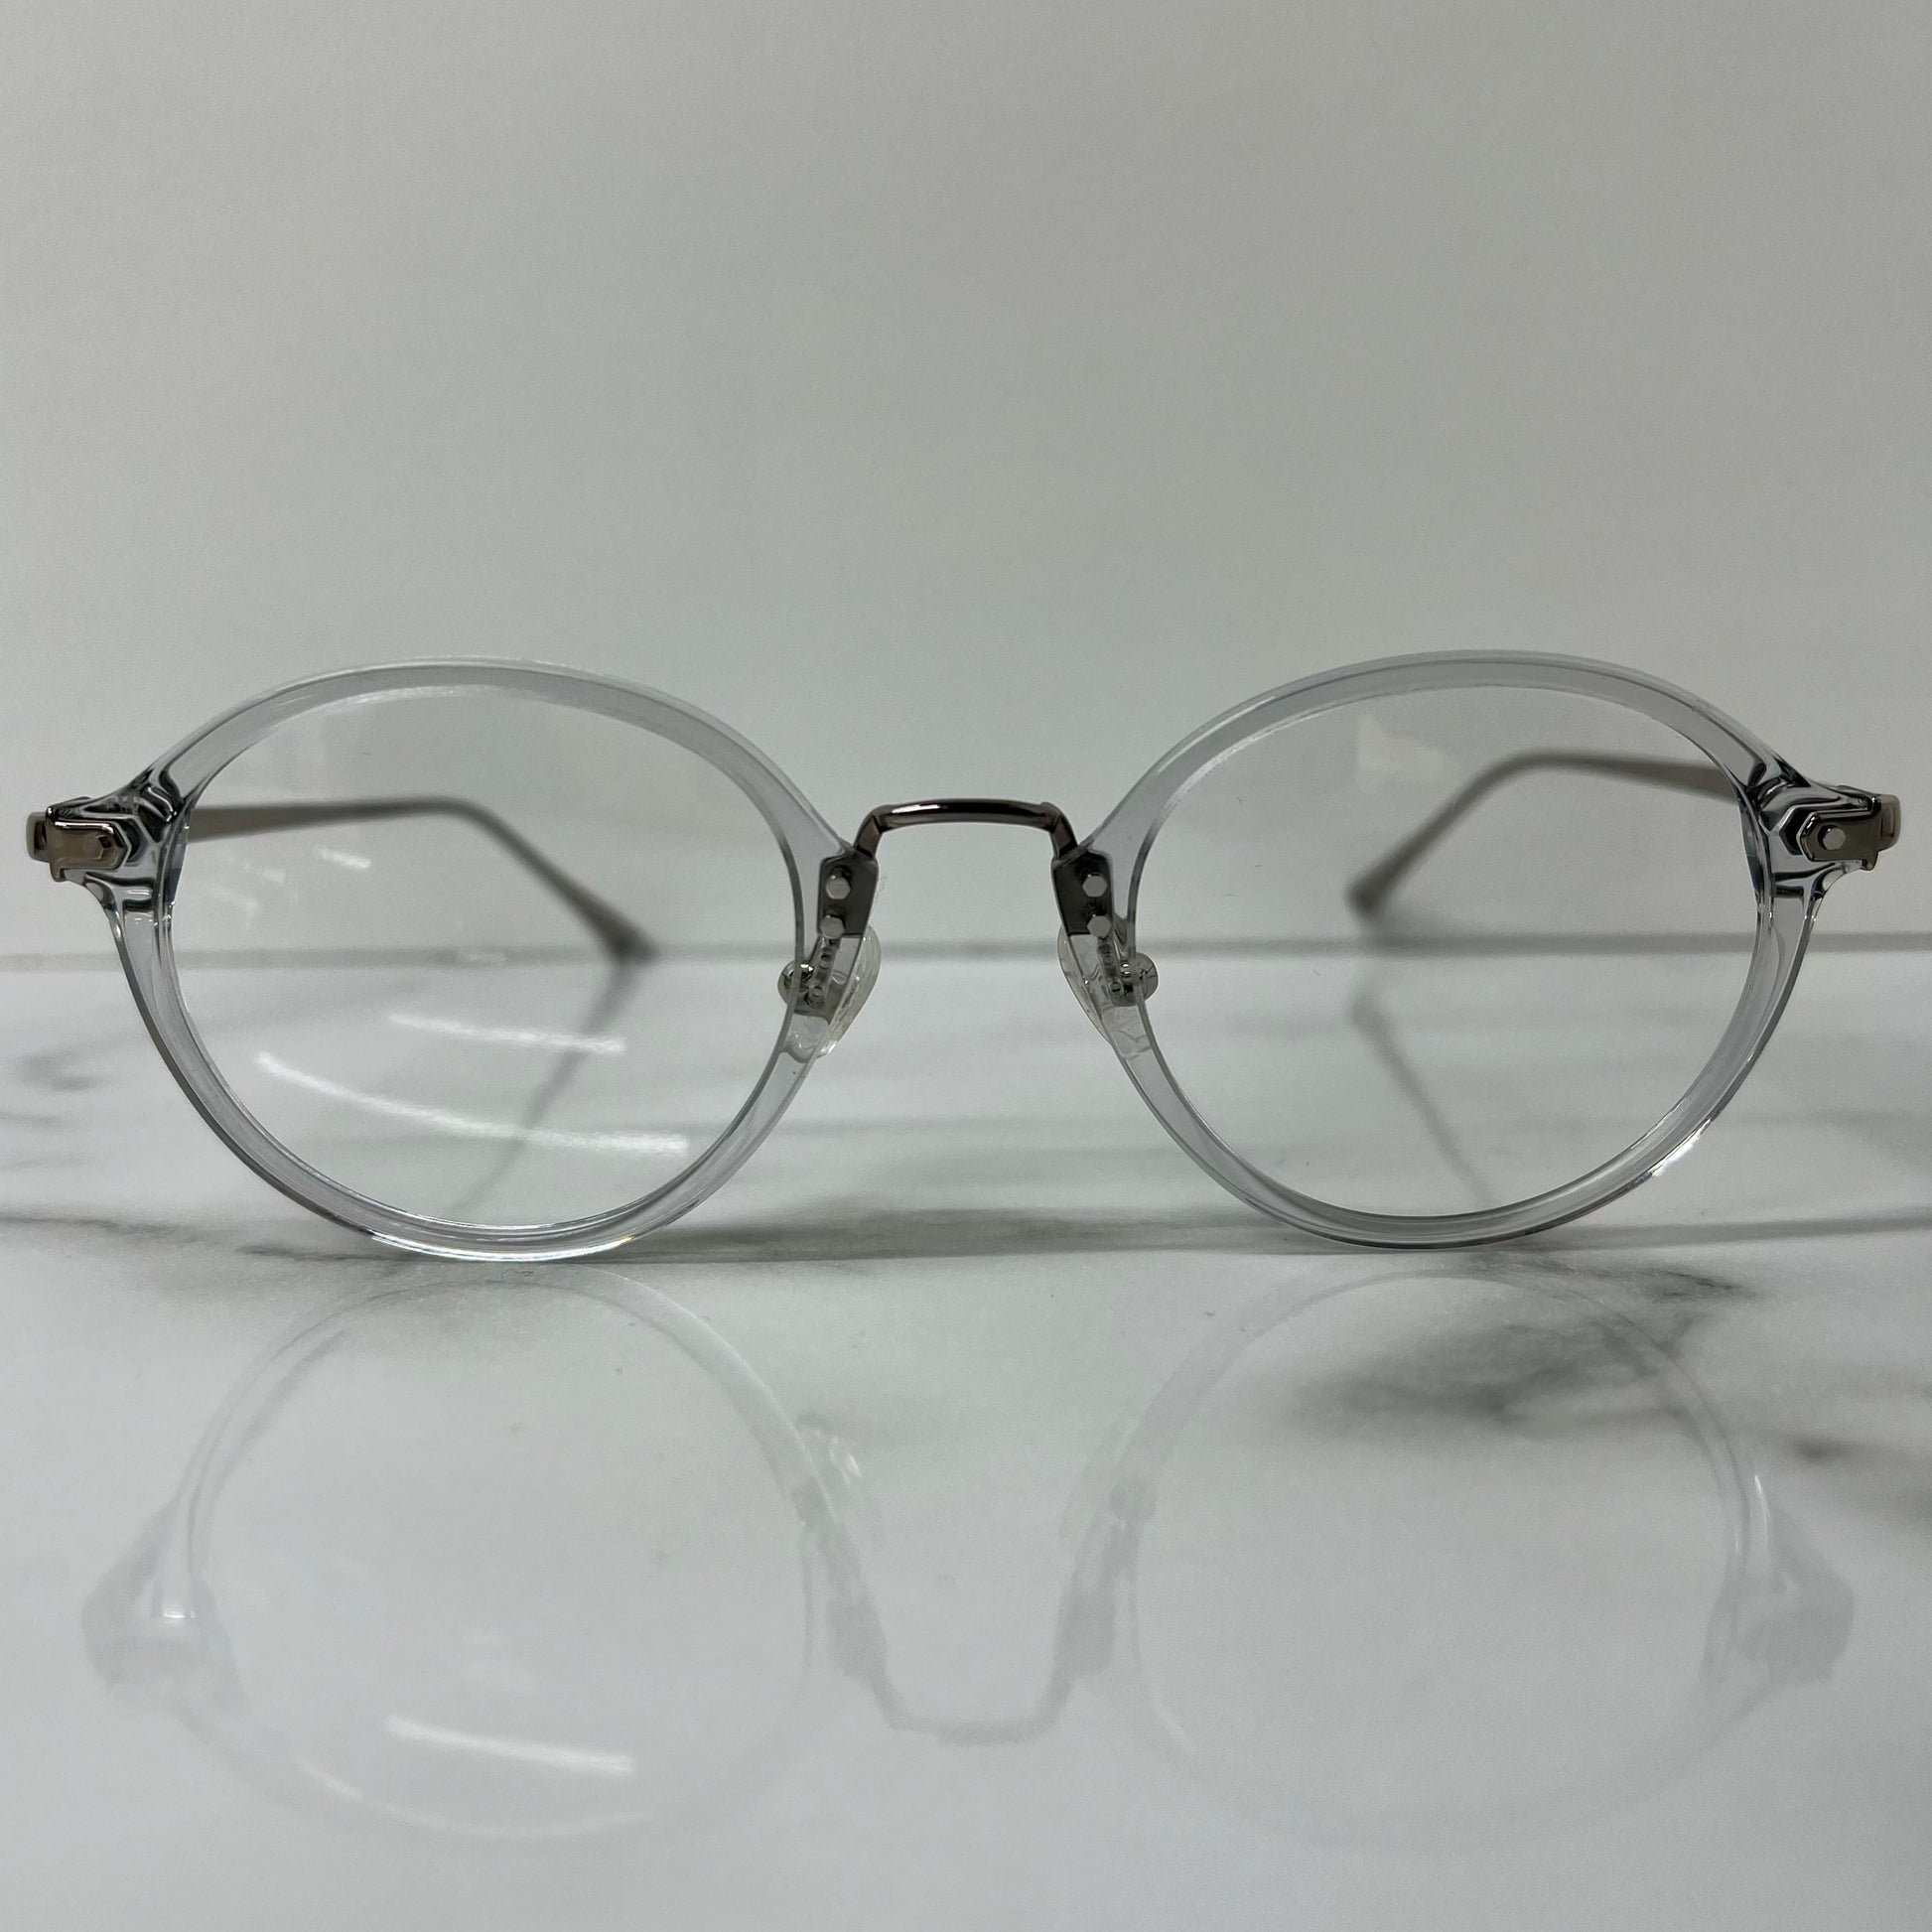 Taylor Morris W10 C4 Prescription Optical Glasses